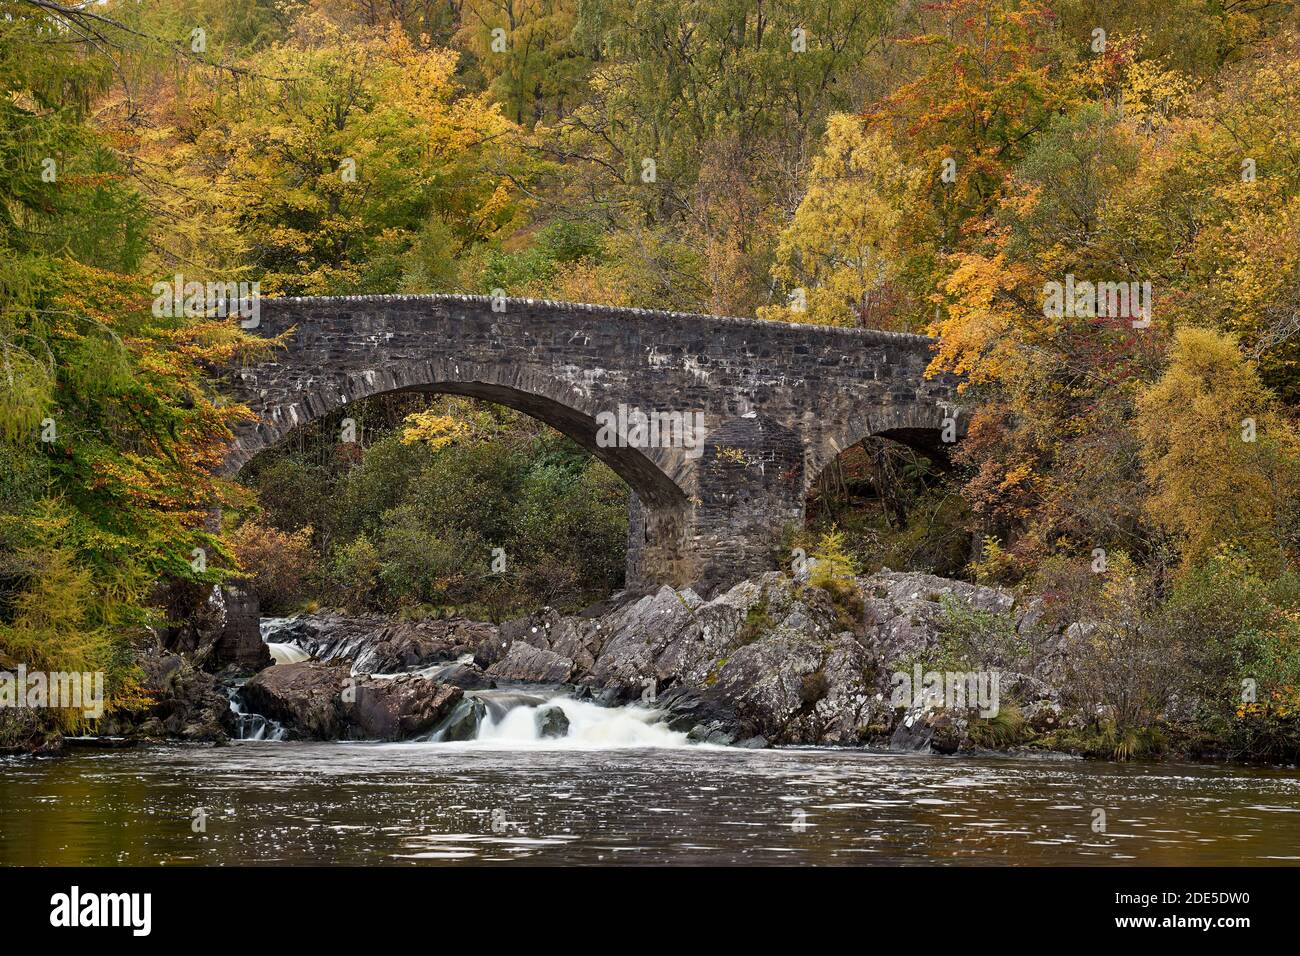 The Bridge of Balgie across the River Lyon, Glen Lyon, Perth and Kinross, Scotland. Stock Photo